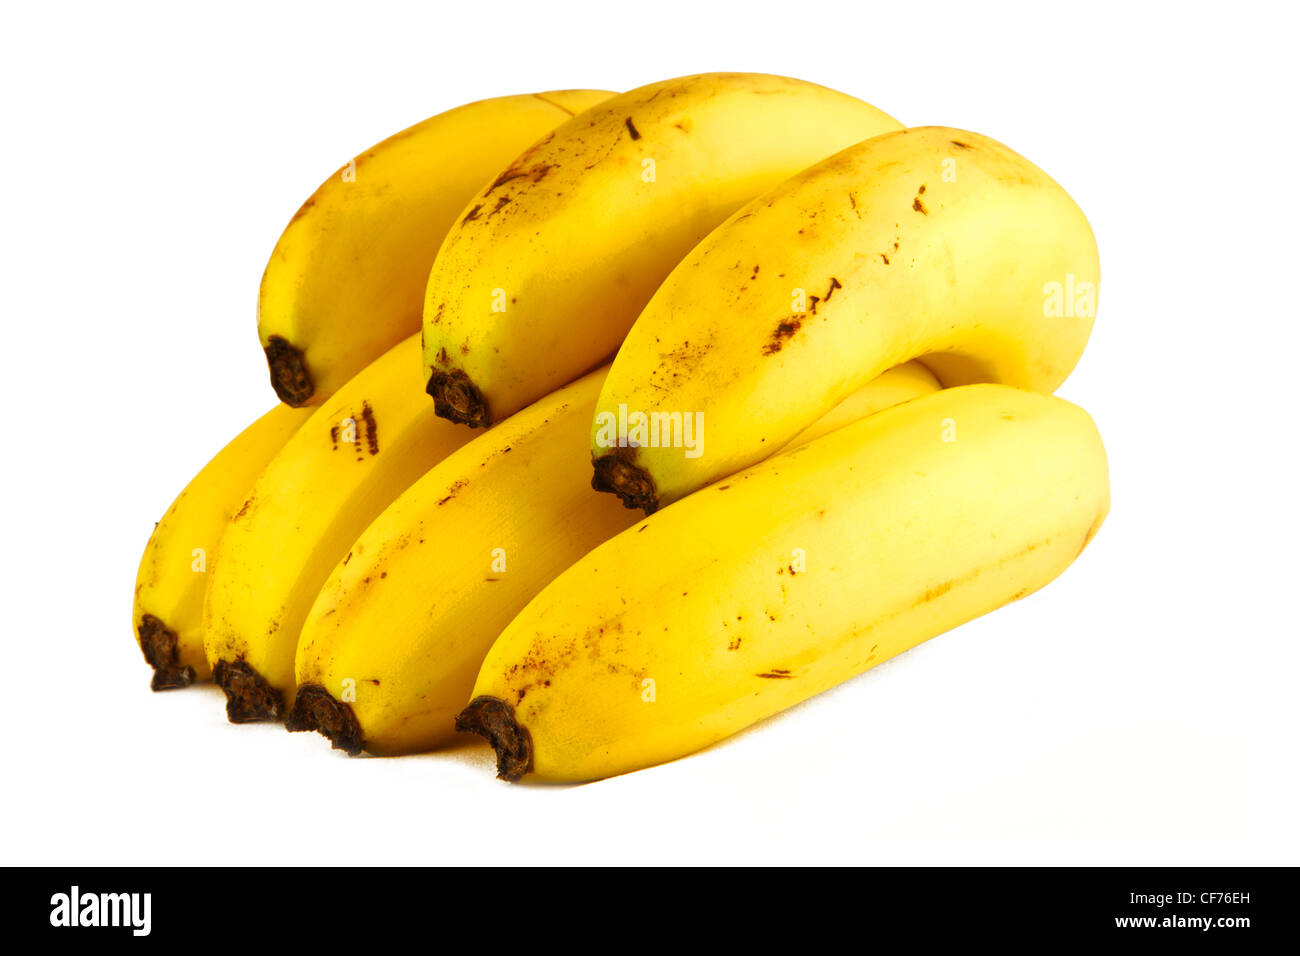 A bunch of seven ripe yellow bananas Stock Photo